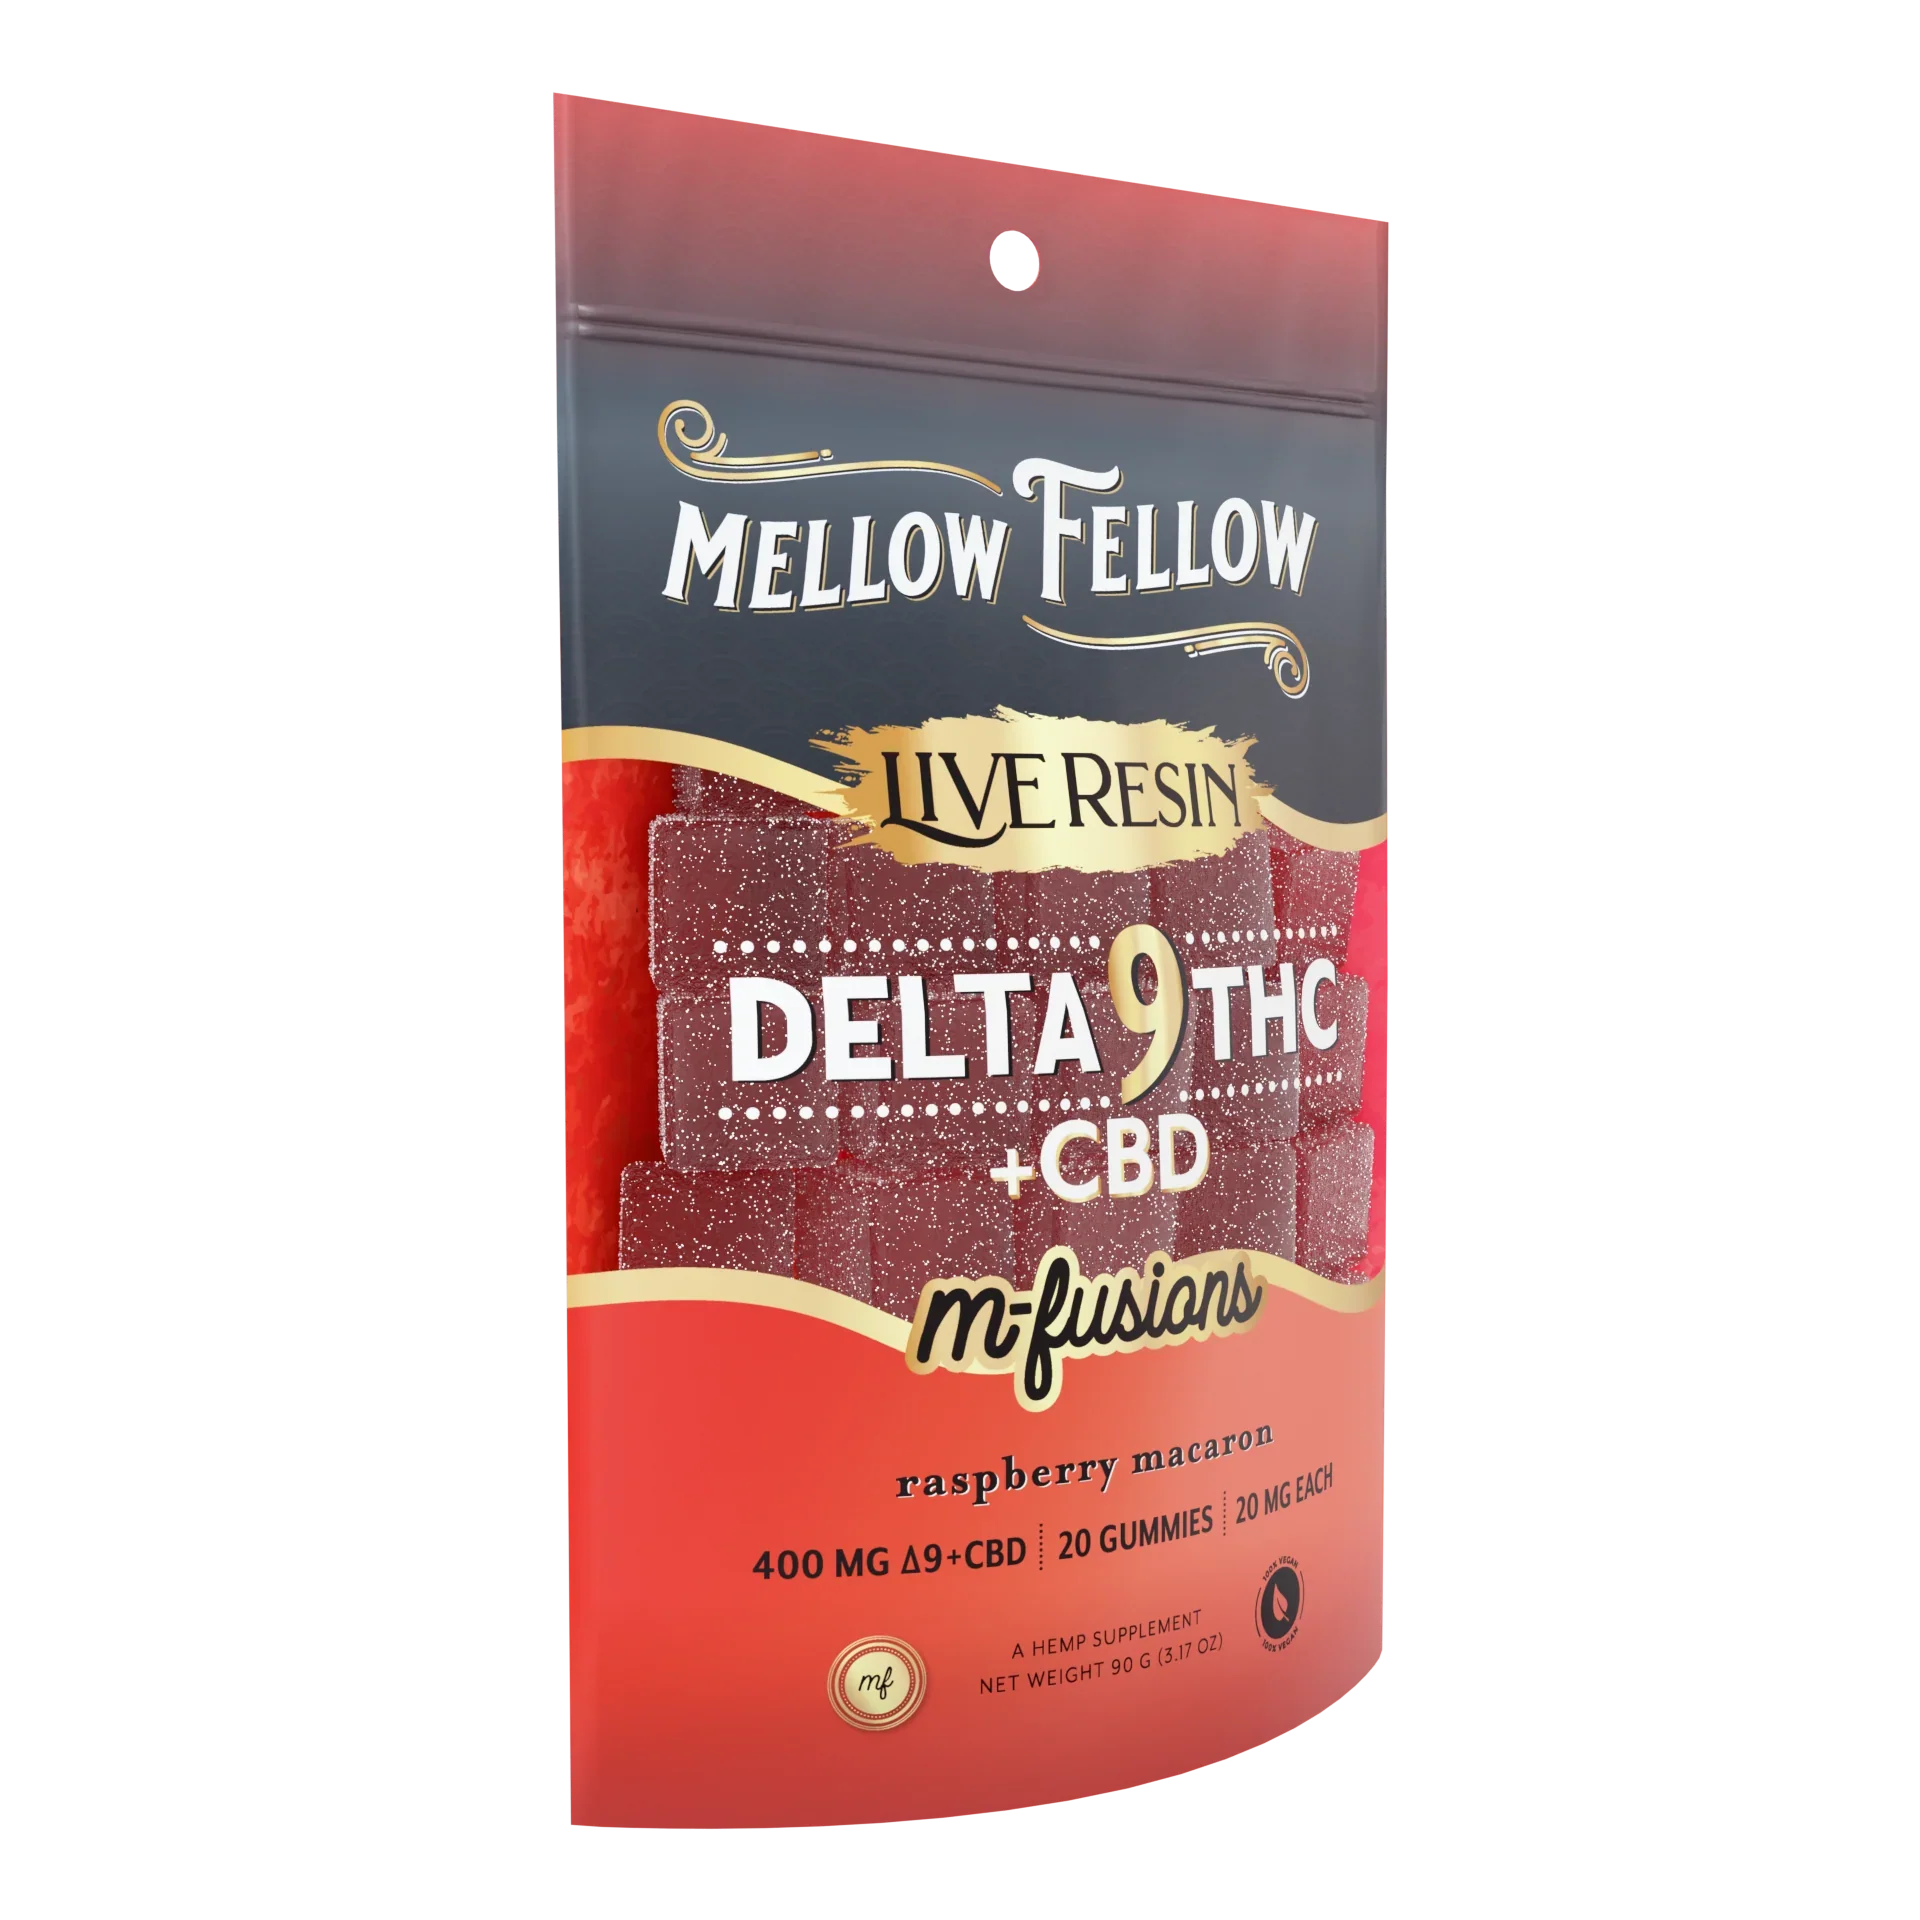 Mellow Fellow Delta 9 Live Resin Edibles 400mg - Raspberry Macaron Best Price